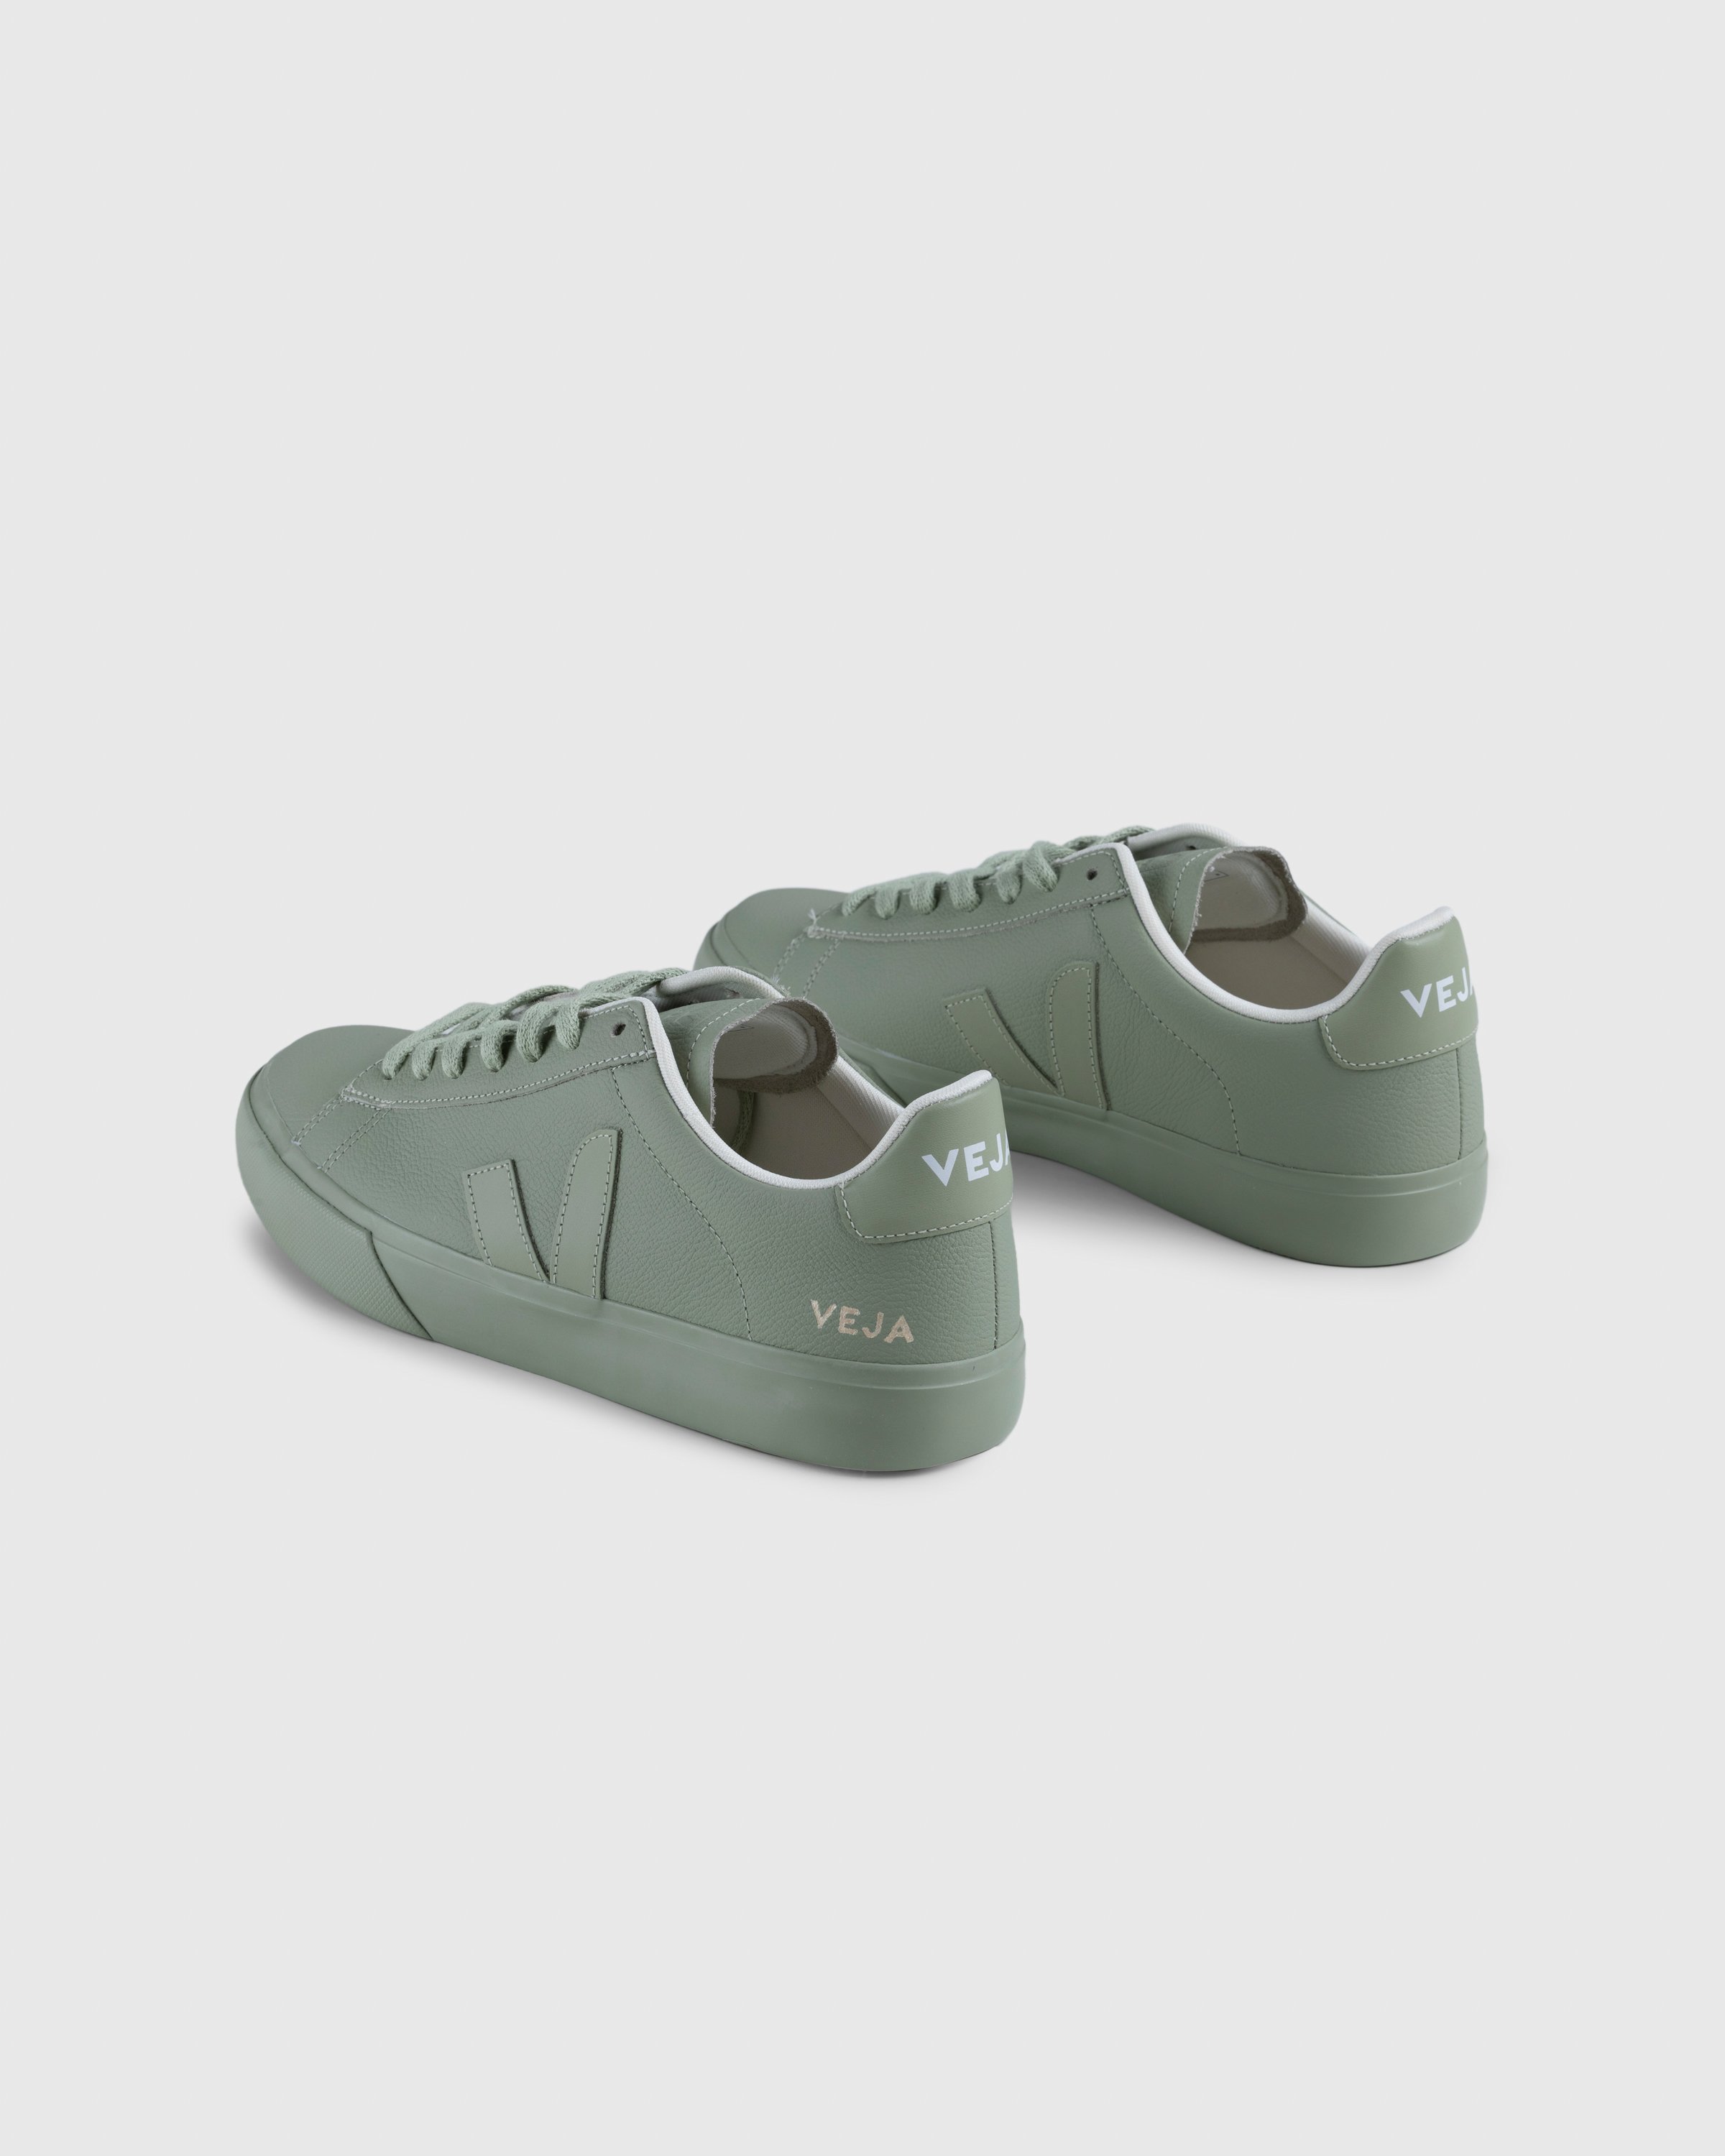 VEJA - Campo Green - Footwear - Green - Image 4